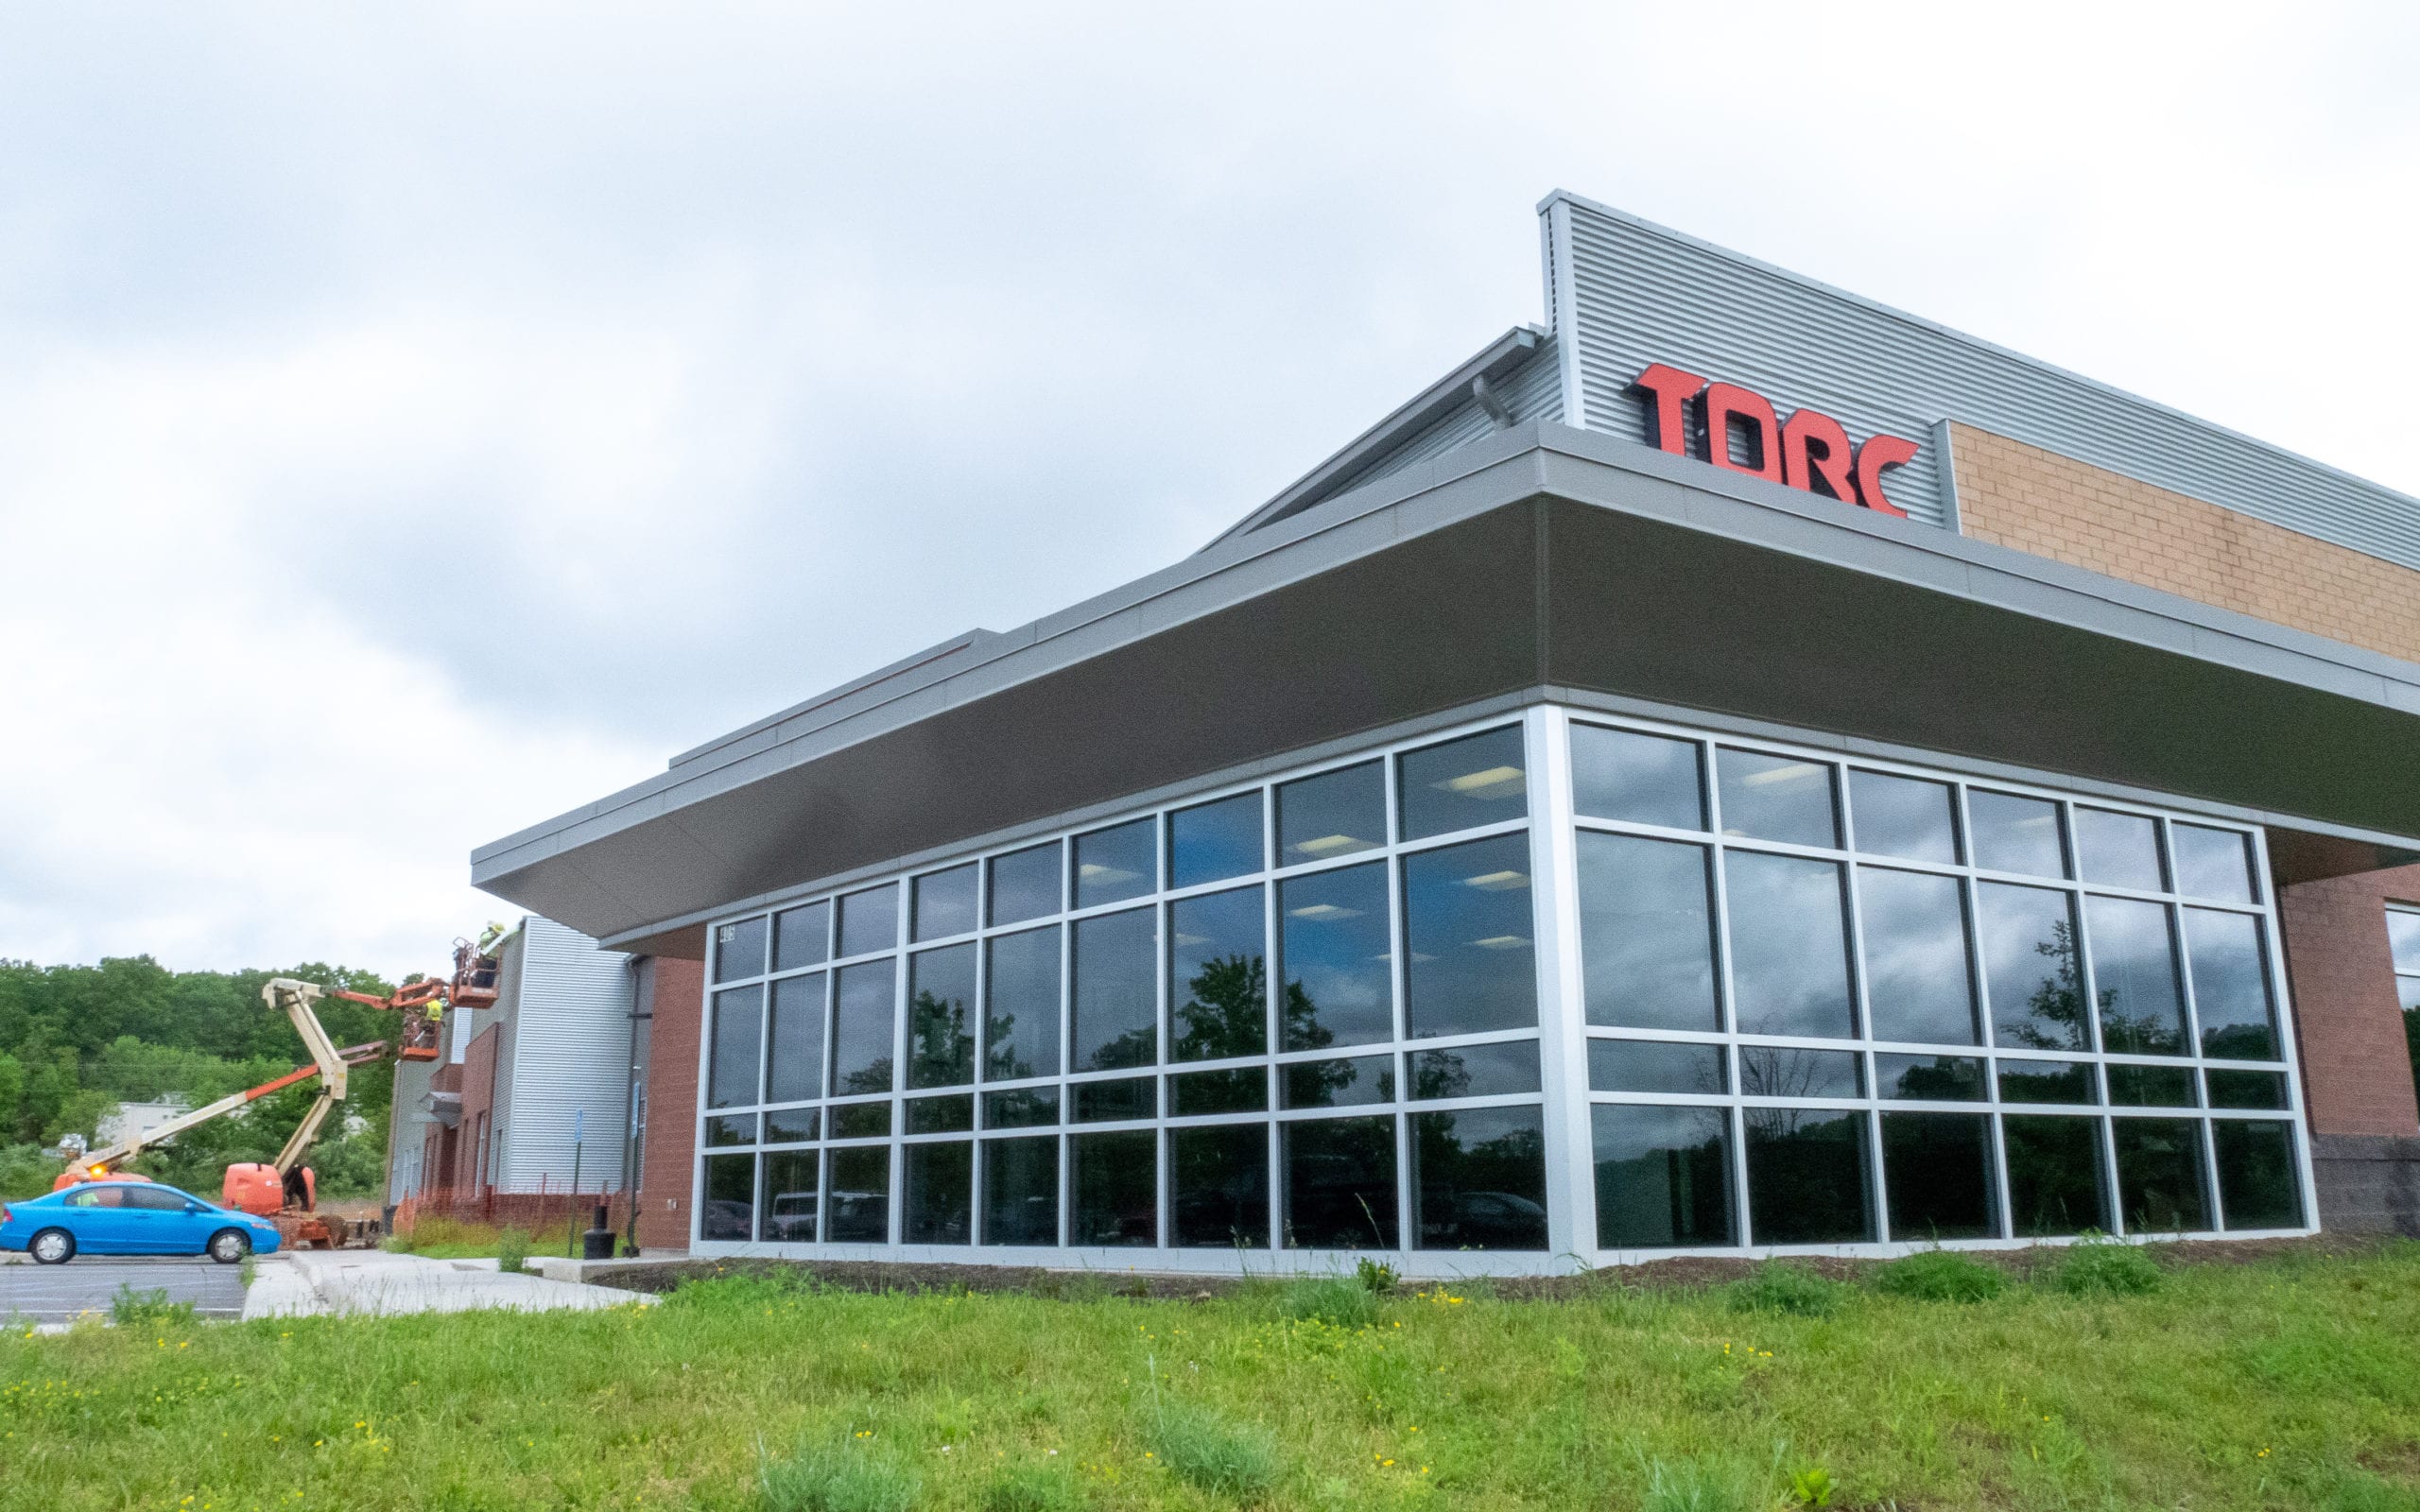 An image of Torc headquarters under construction in Blacksburg, Virginia.